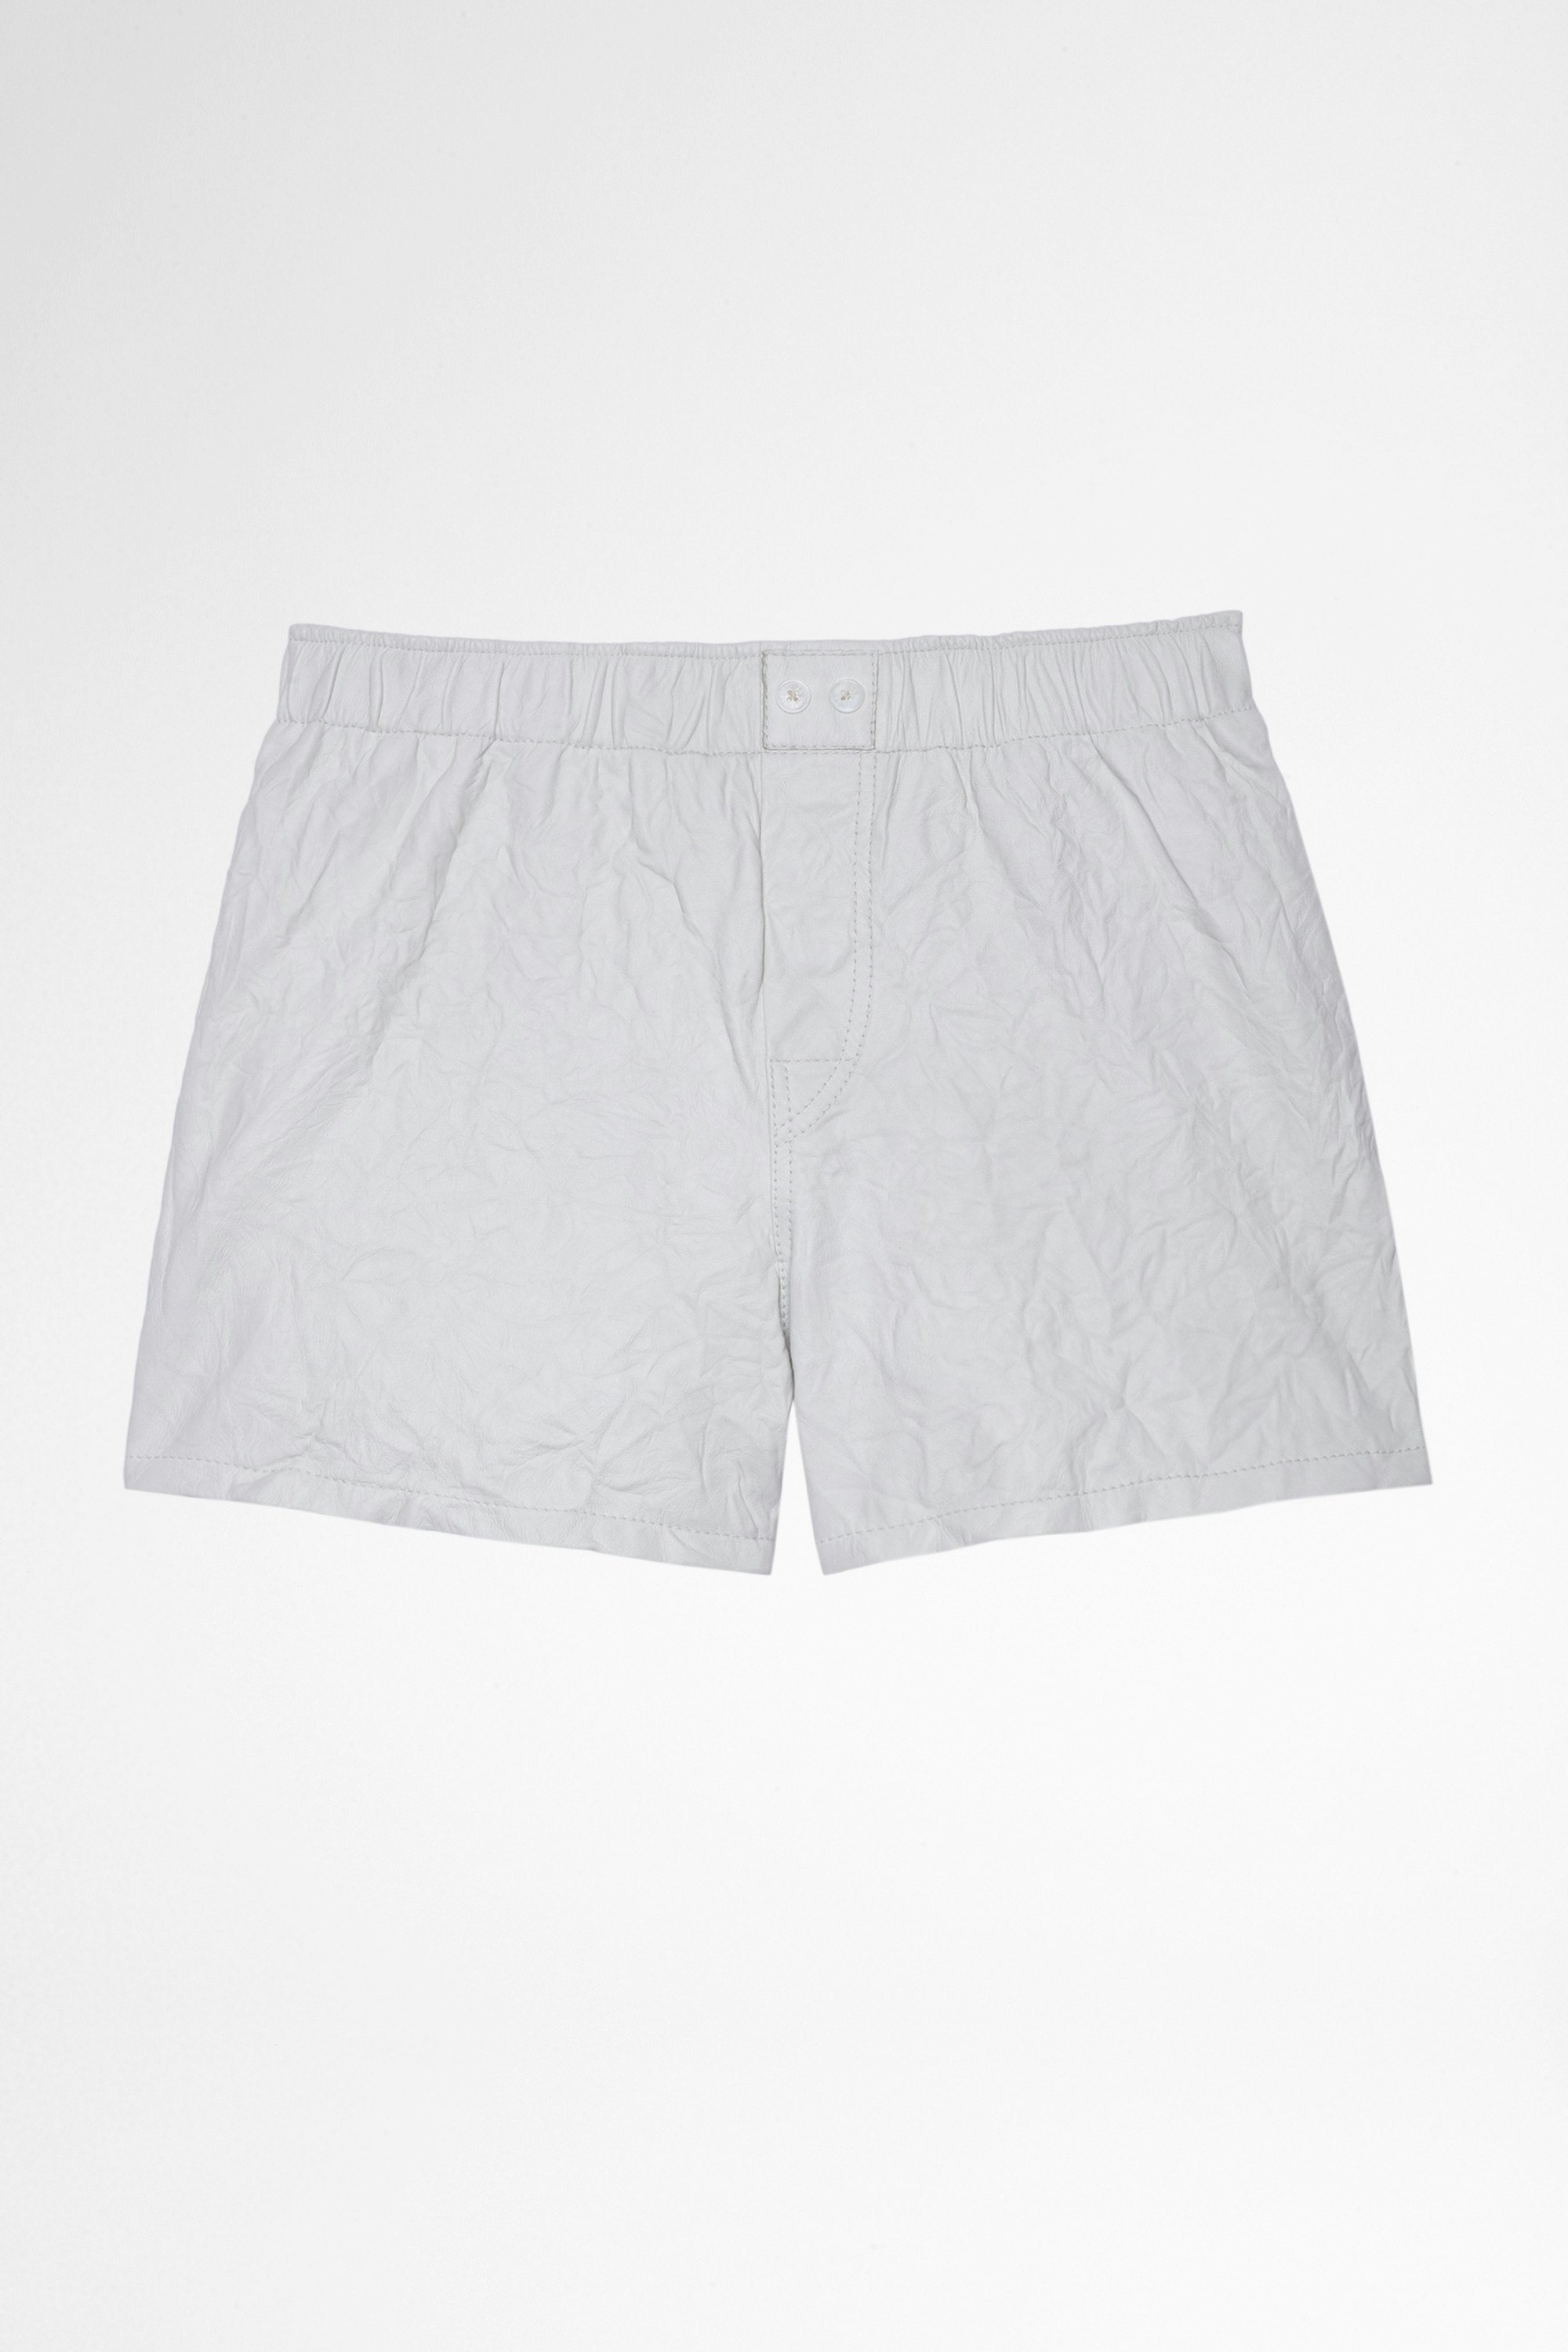 Shorts Pax Pelle Stropicciata Shorts in pelle stropicciata bianca donna